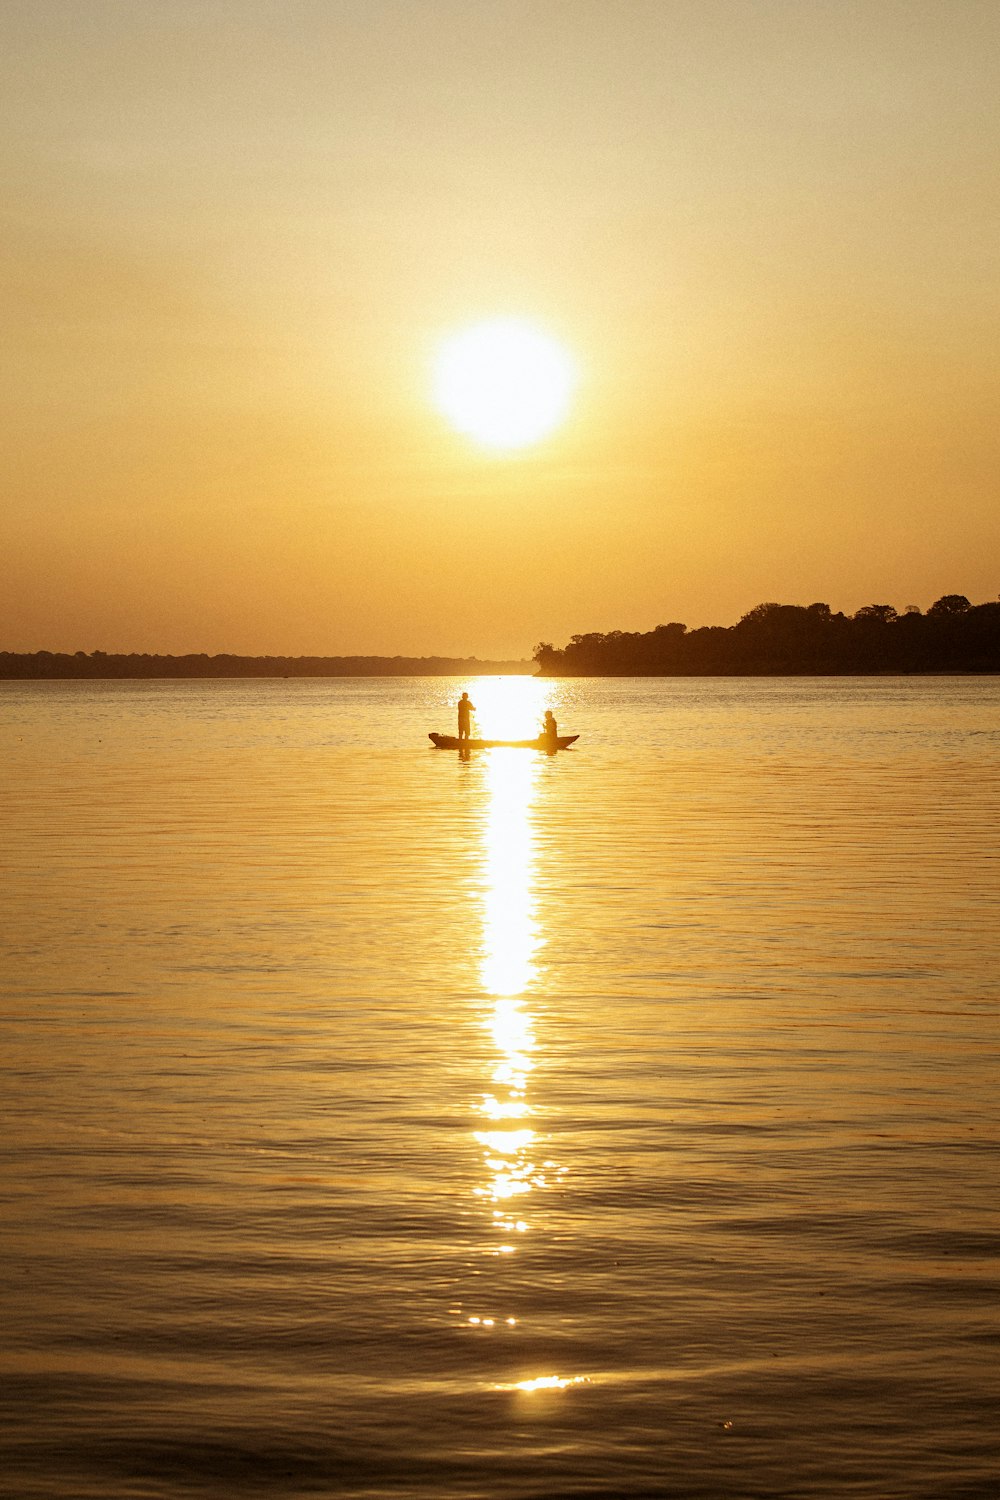 una persona in una barca su un lago al tramonto